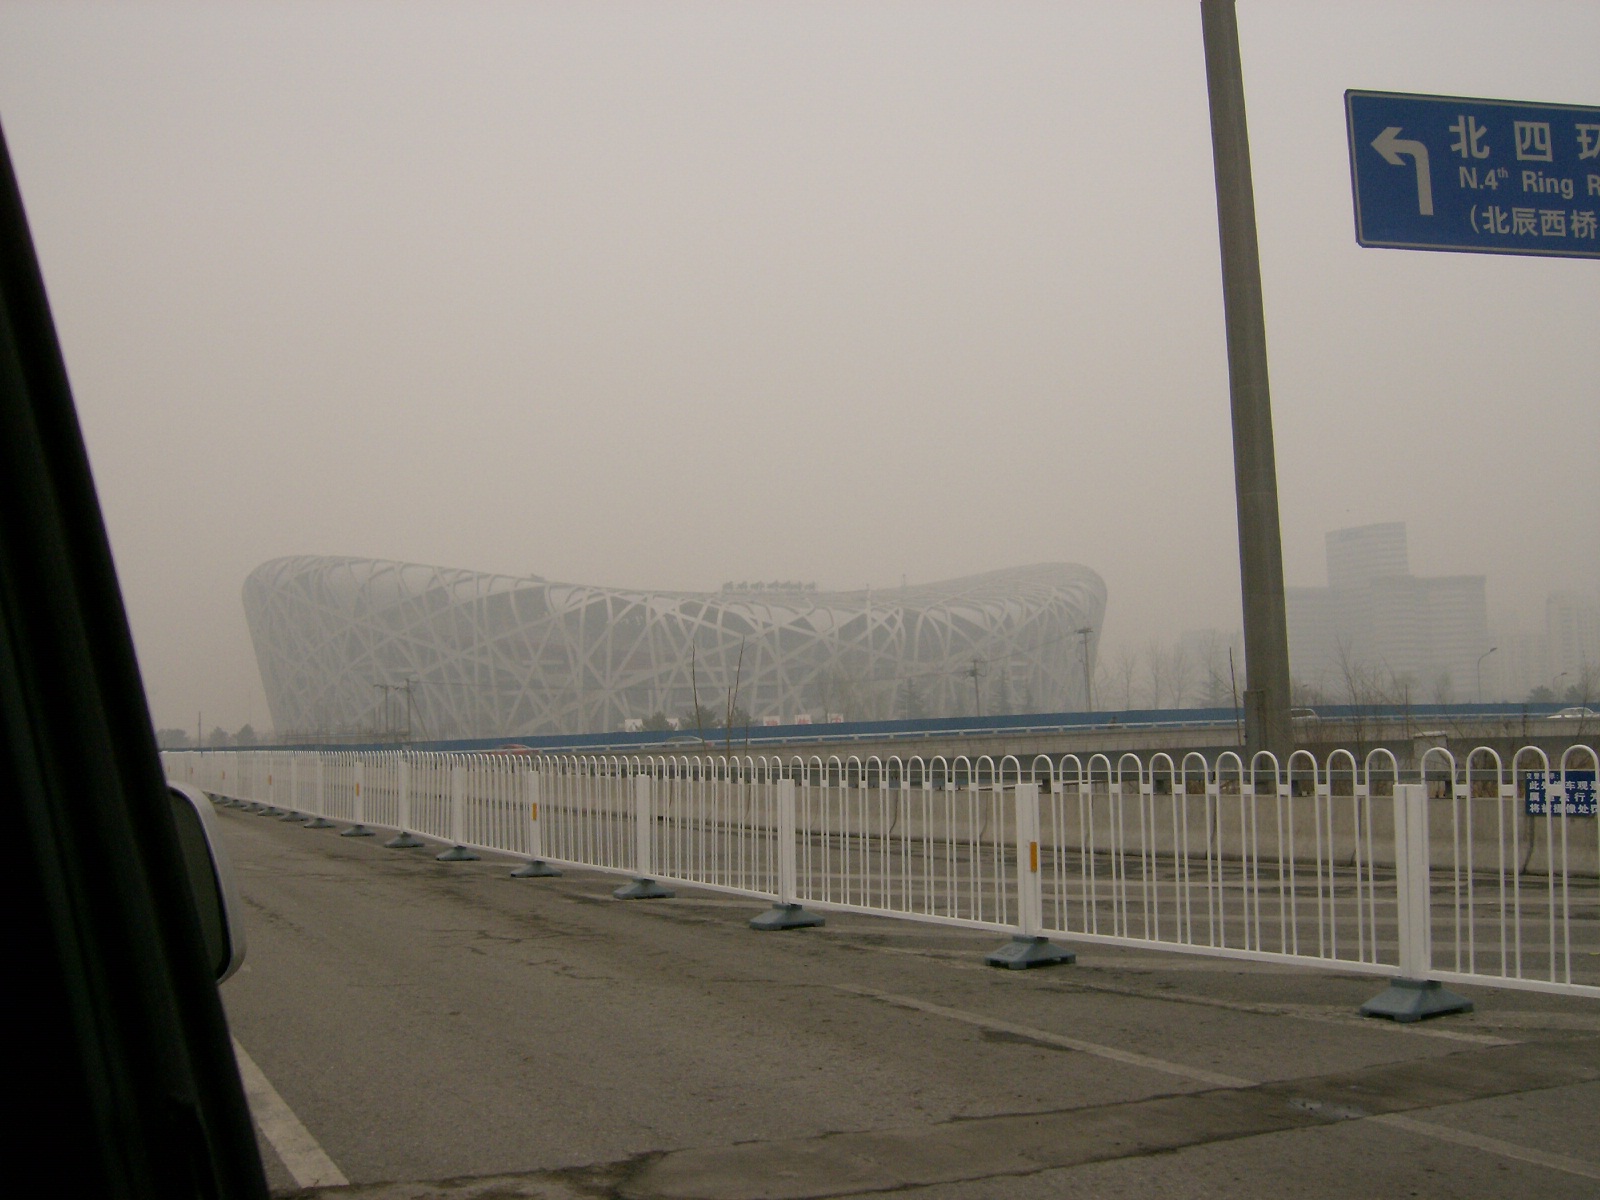 The Olympic stadium glimpsed through the murk